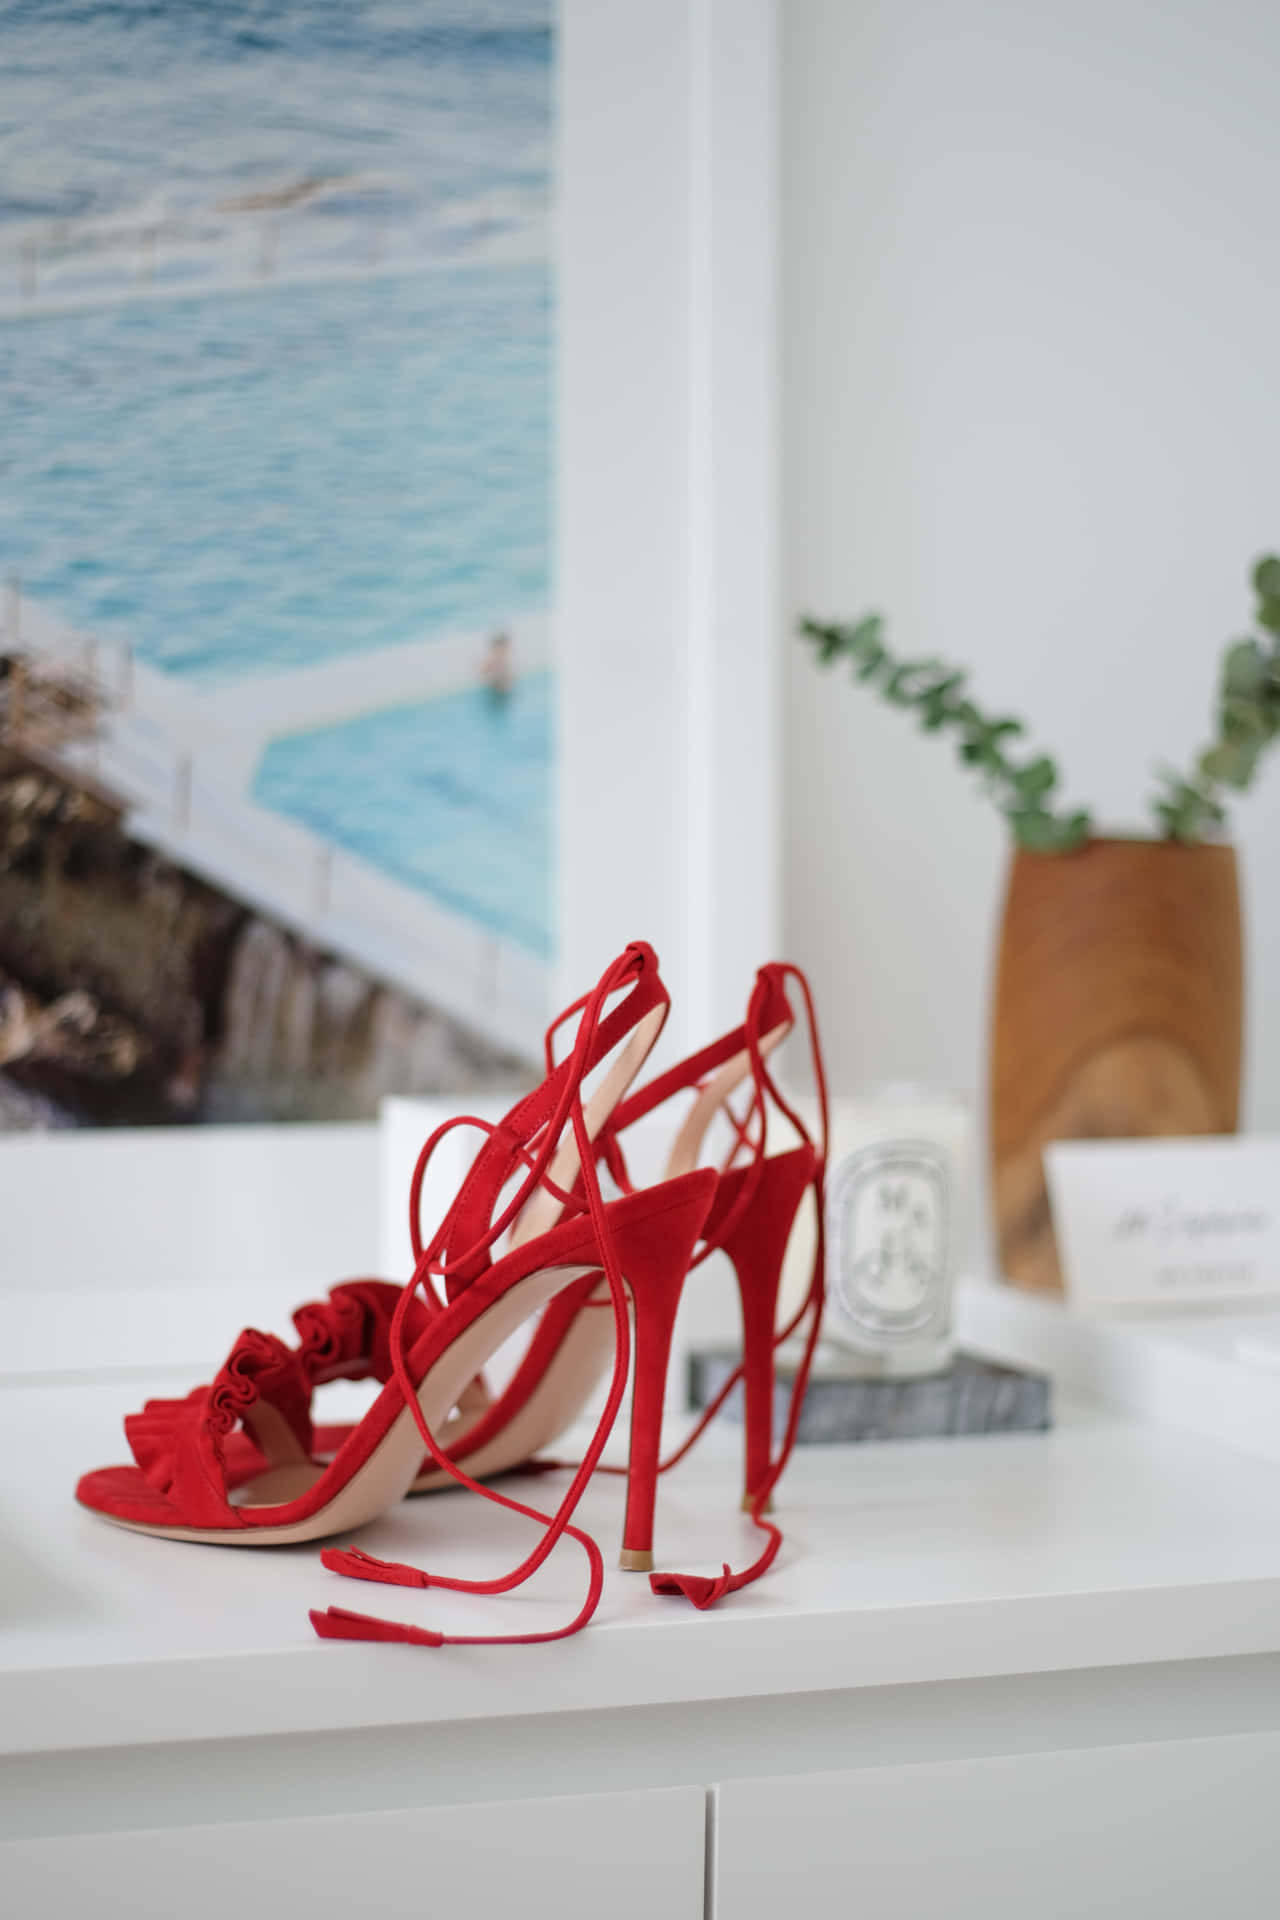 Caption: Elegant Red High Heels on Display Wallpaper